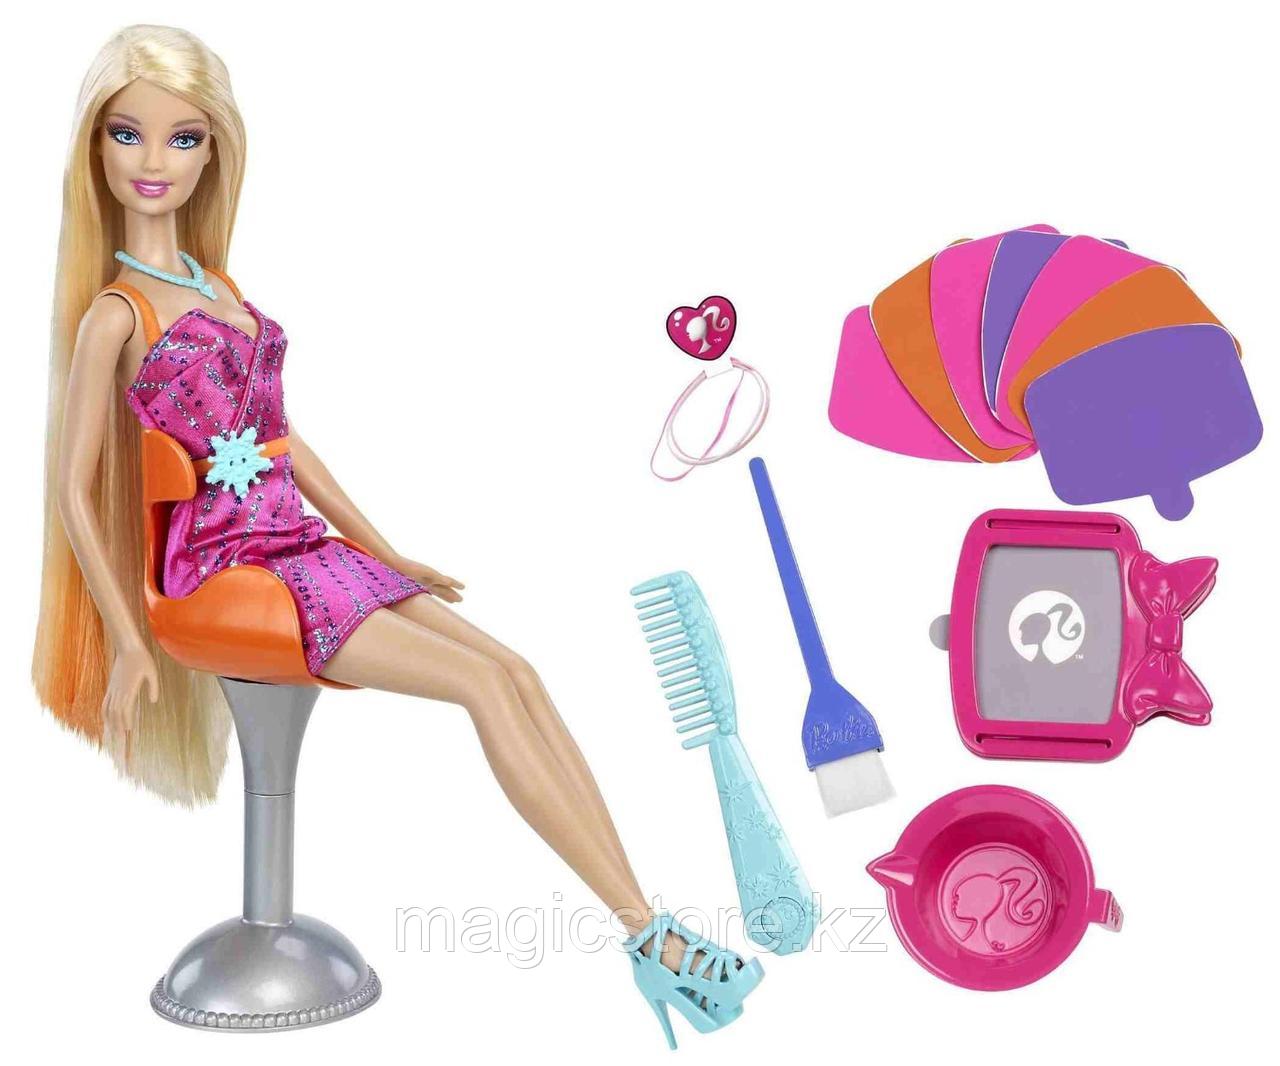 Кукла Барби Колор укладывающая волосы Barbie Color stylin hair